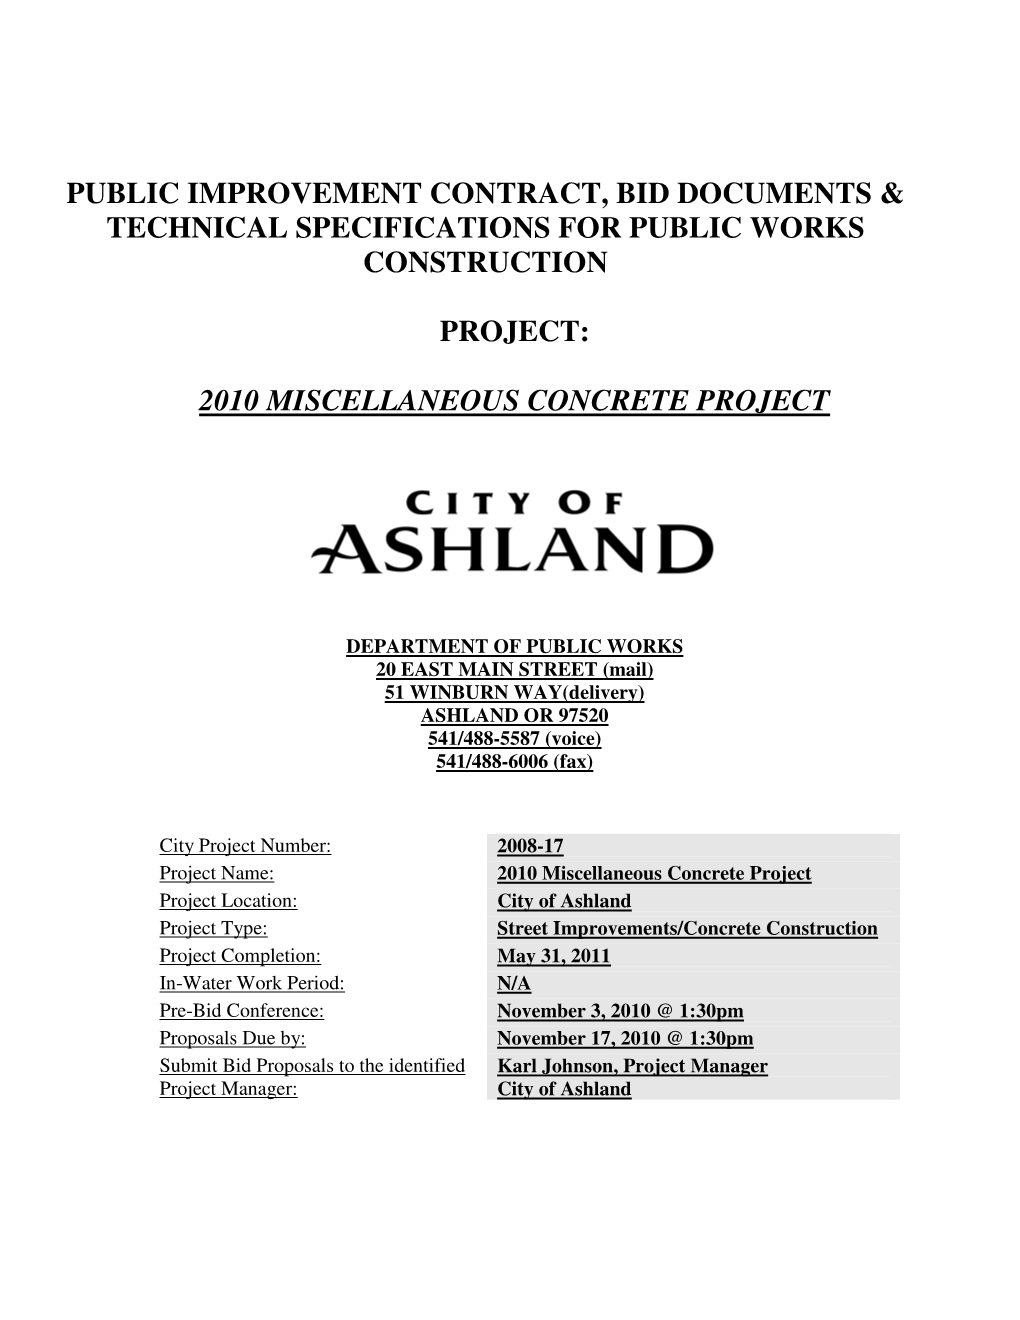 Public Improvement Contract, Bid Documents & Technical Specifications for Public Works Construction